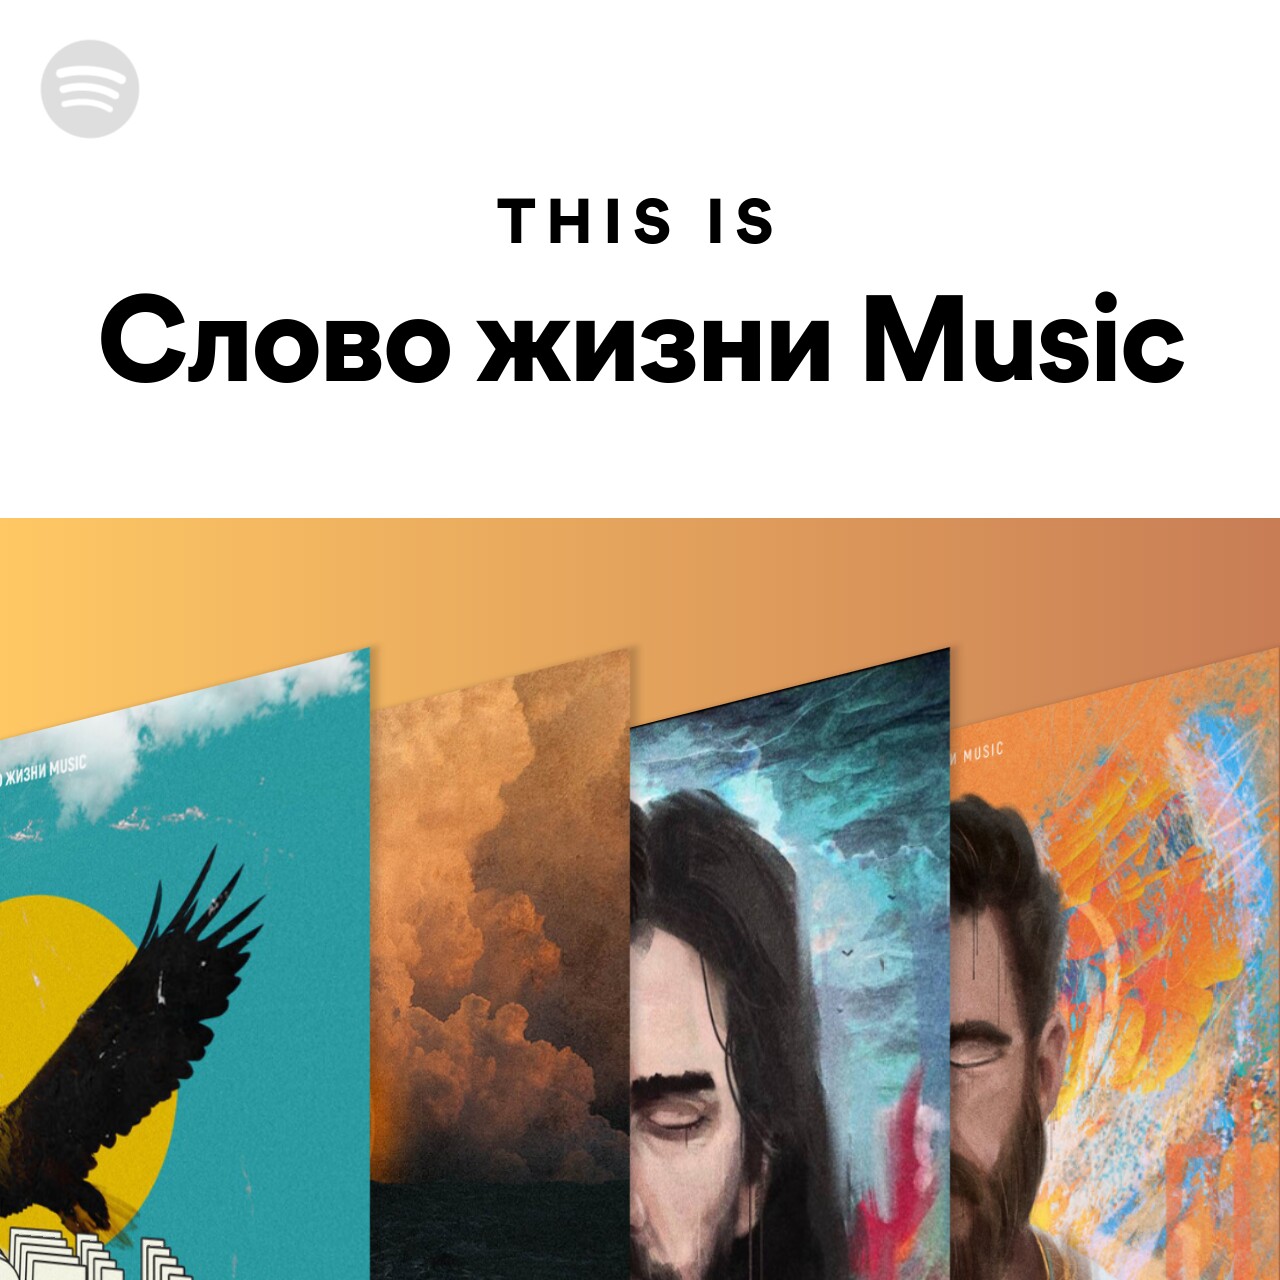 This Is Слово жизни Music